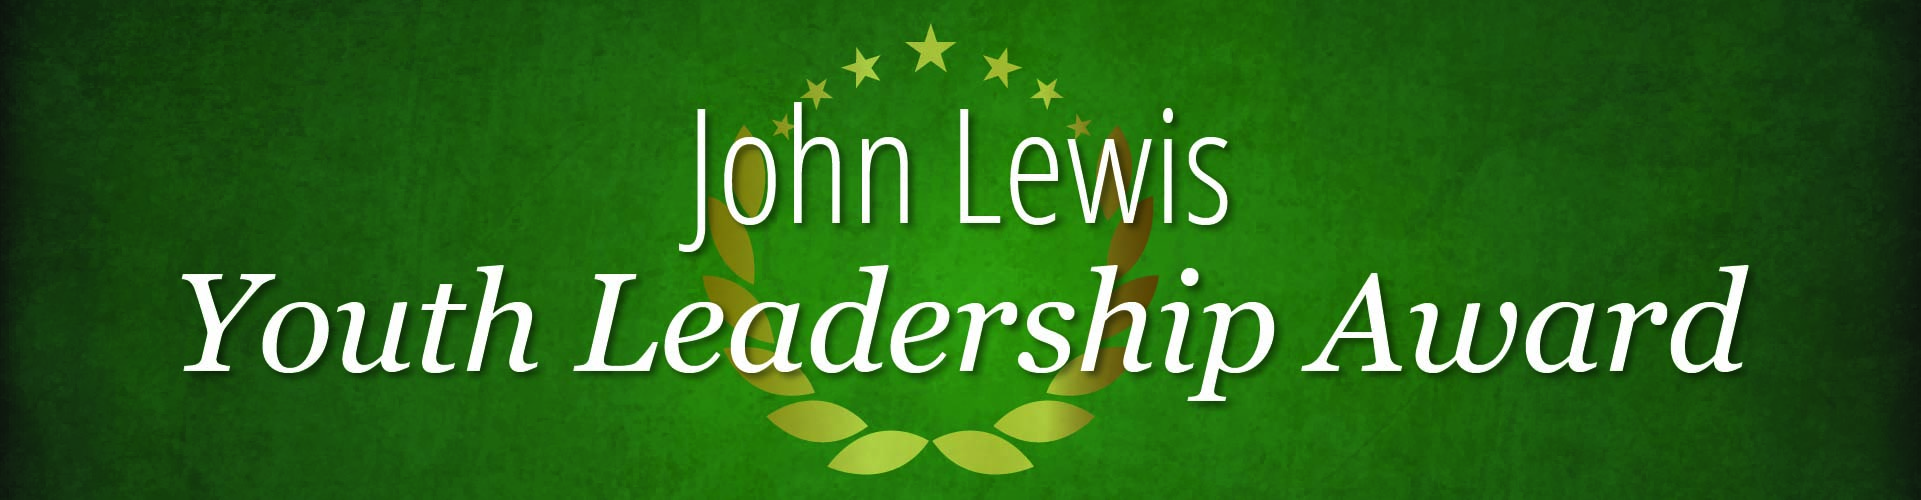 John Lewis Youth Leadership Award Website Banner